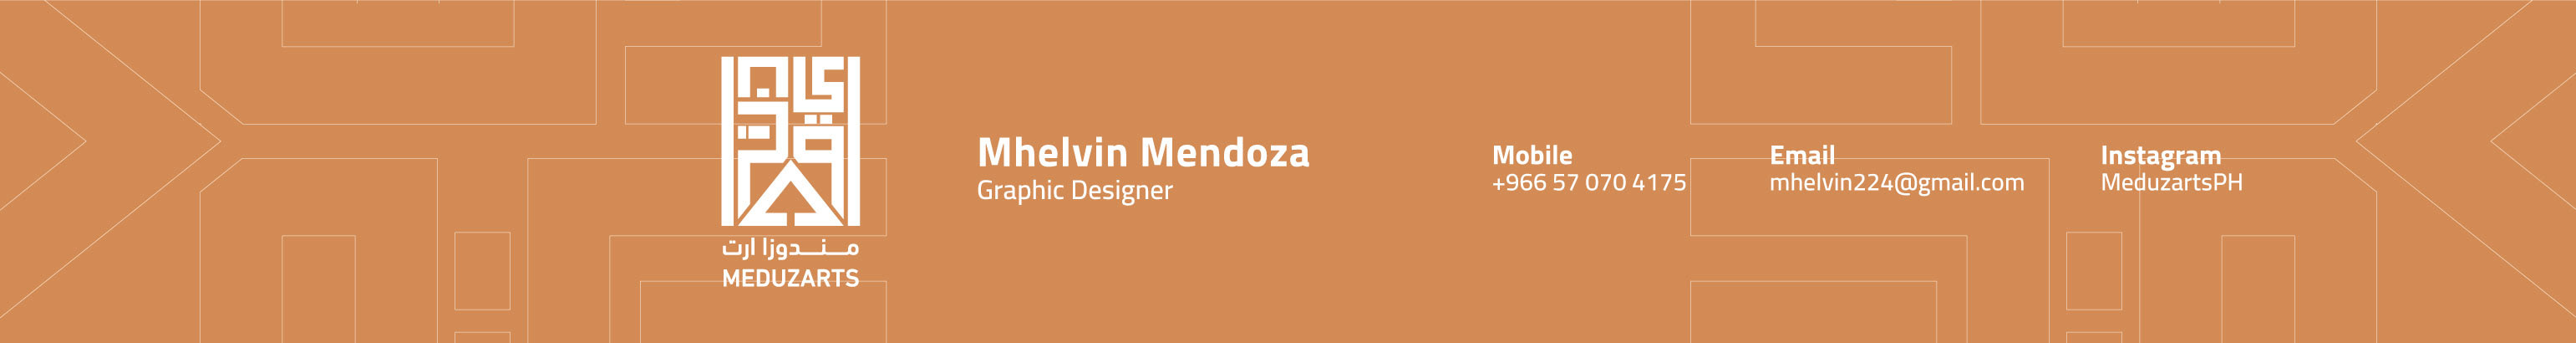 Mhelvin Mendoza 的個人檔案橫幅